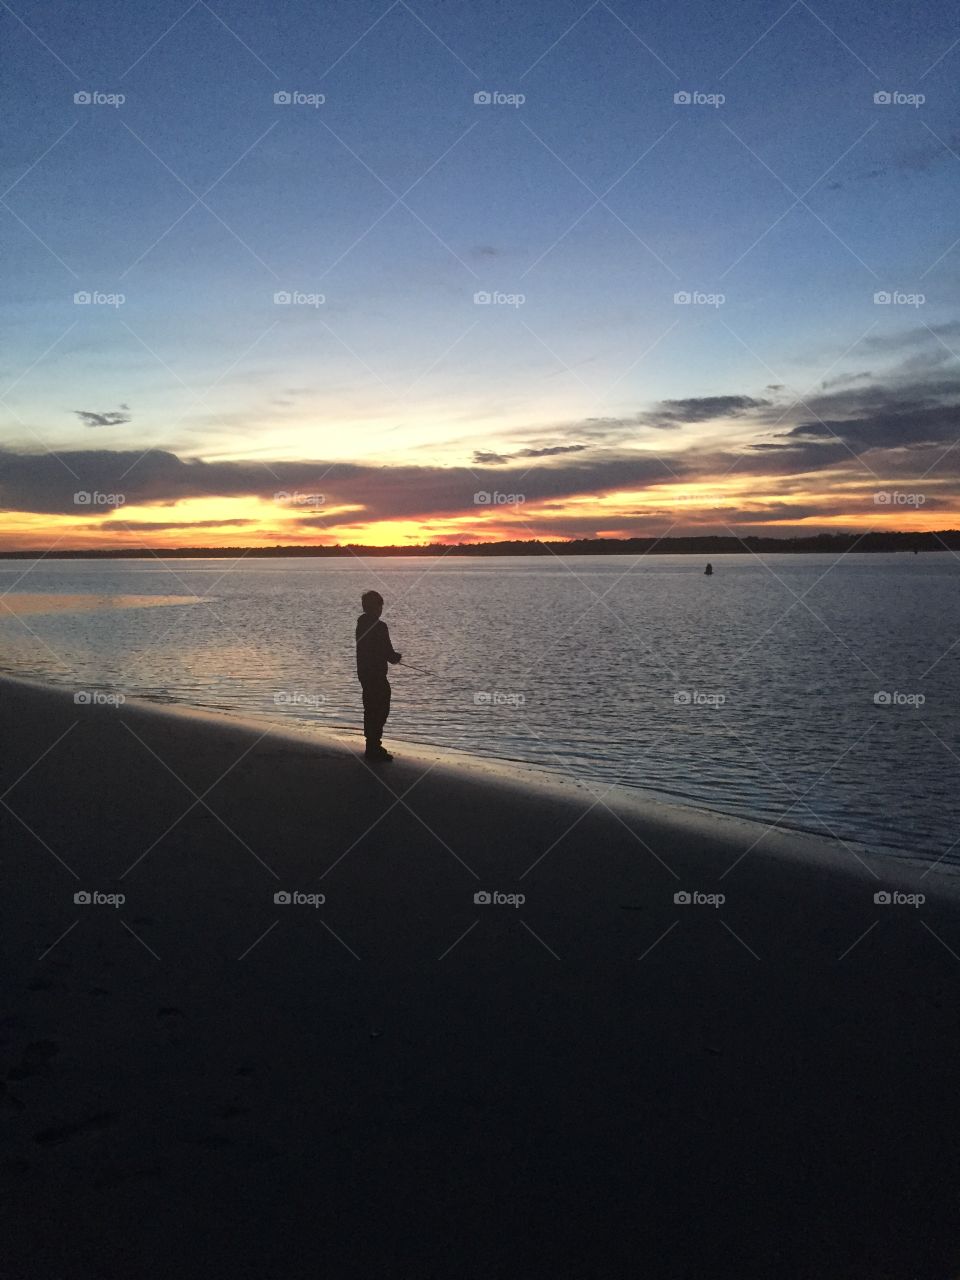 Sunset saltwater fishing on Wrightsville Beach, NC